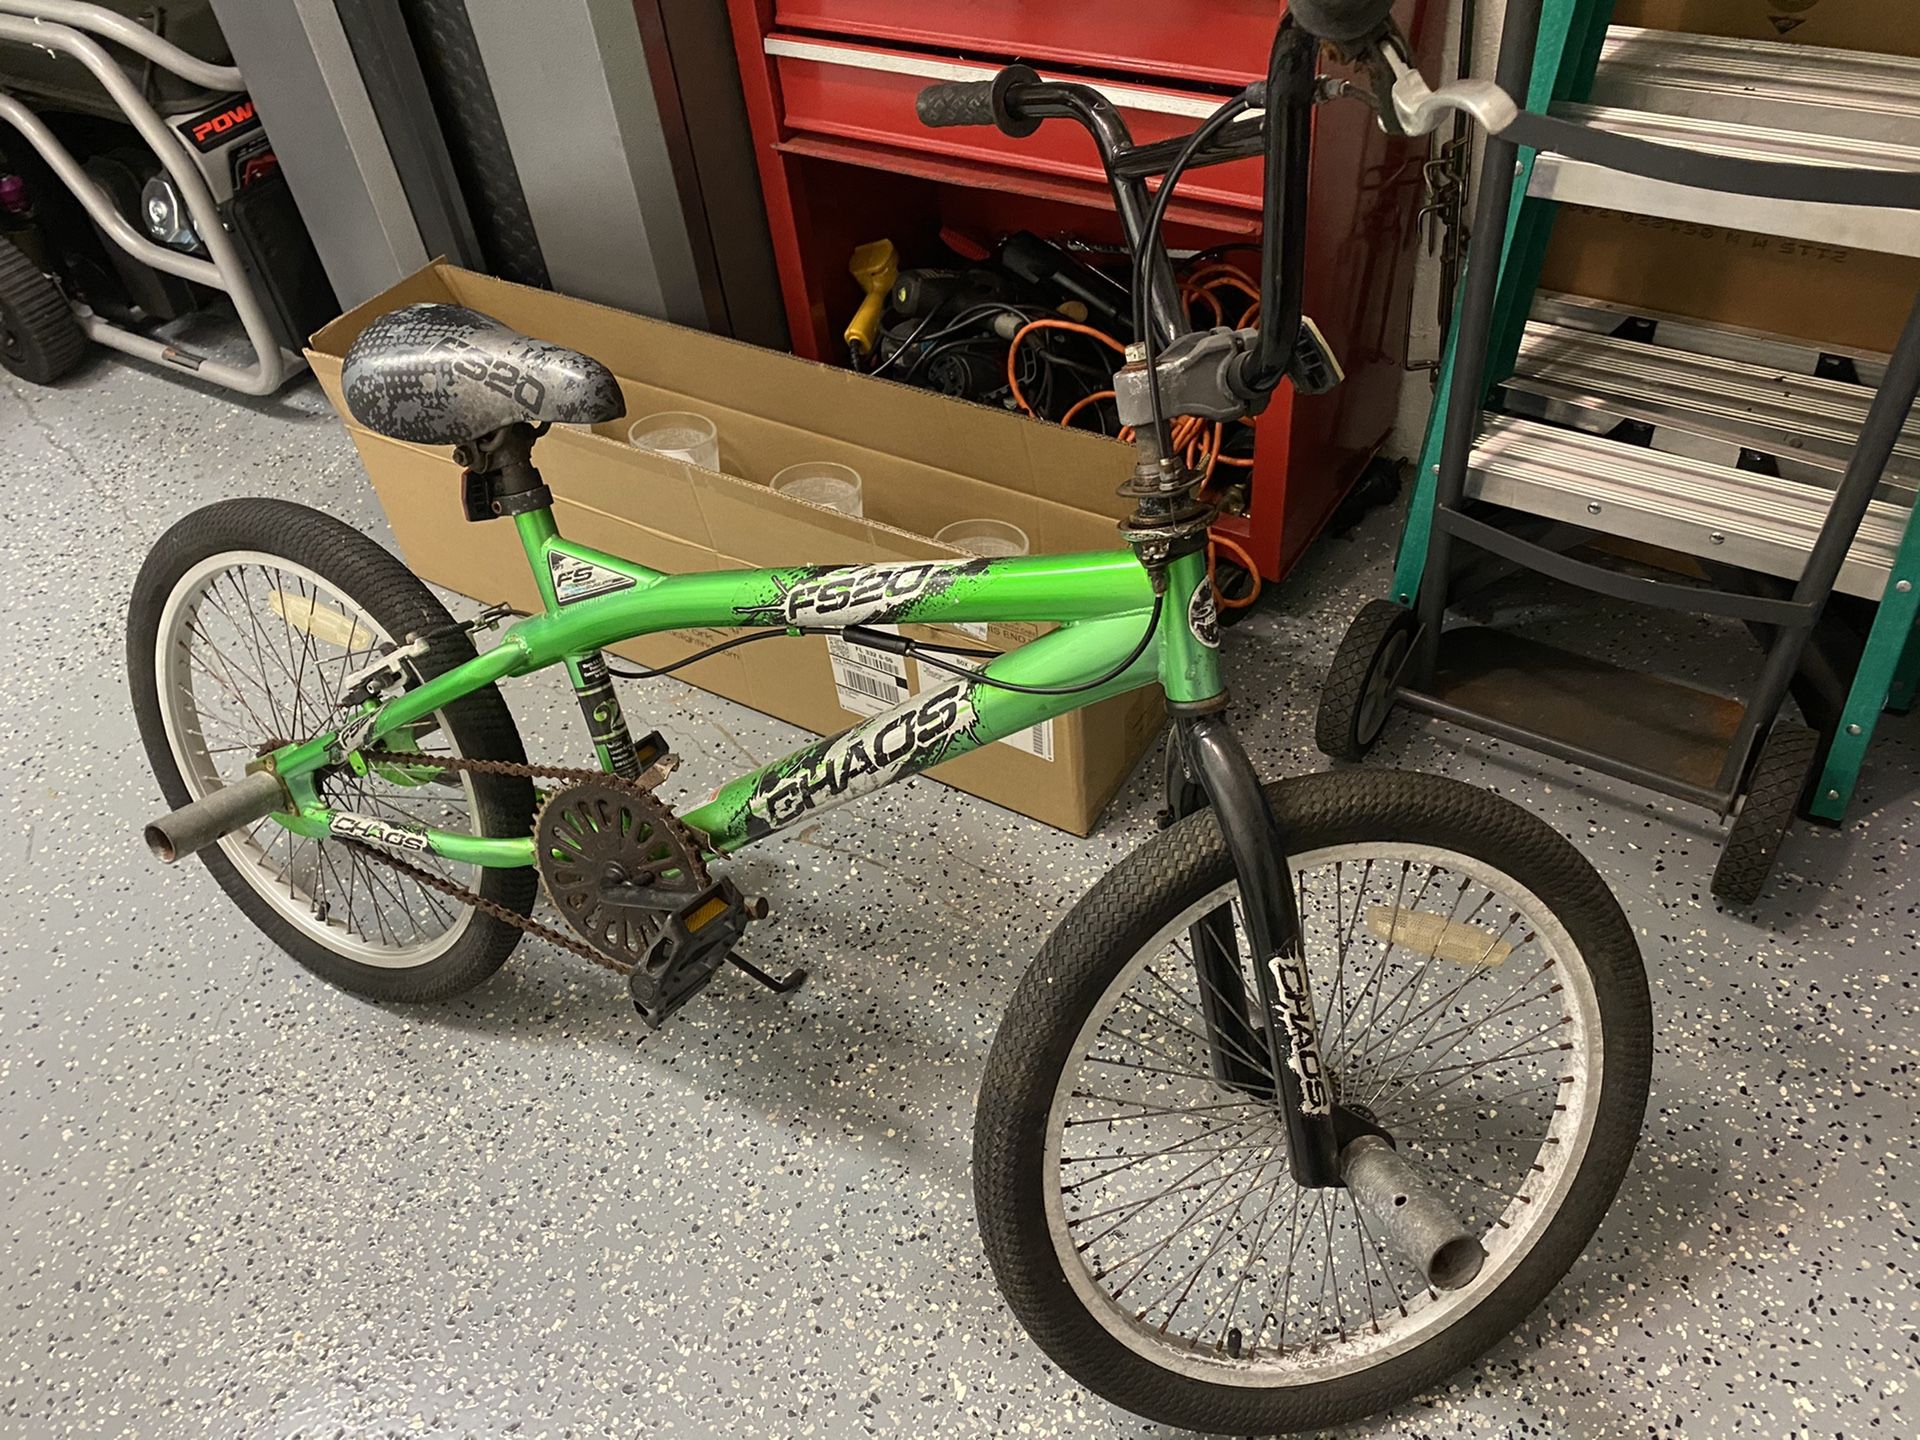 Kids 20 inch bike